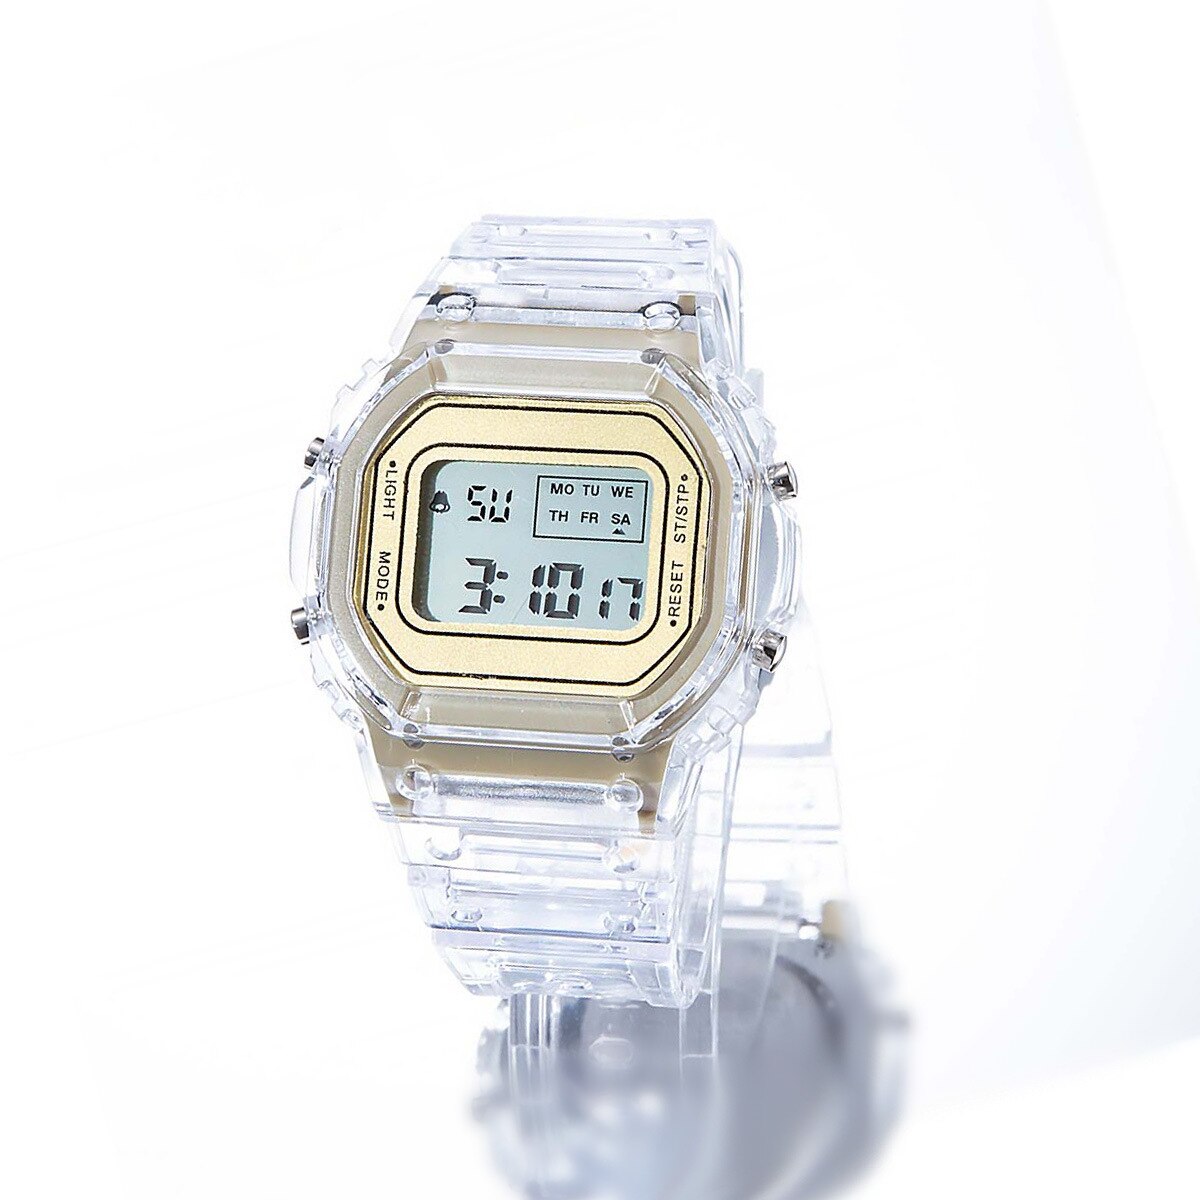 Ins Mannen Vrouwen Horloges Casual Transparante Digitale Sport Horloge Dames Elektronische Horloges Kid 'S Horloge Relogio Digitale: gold